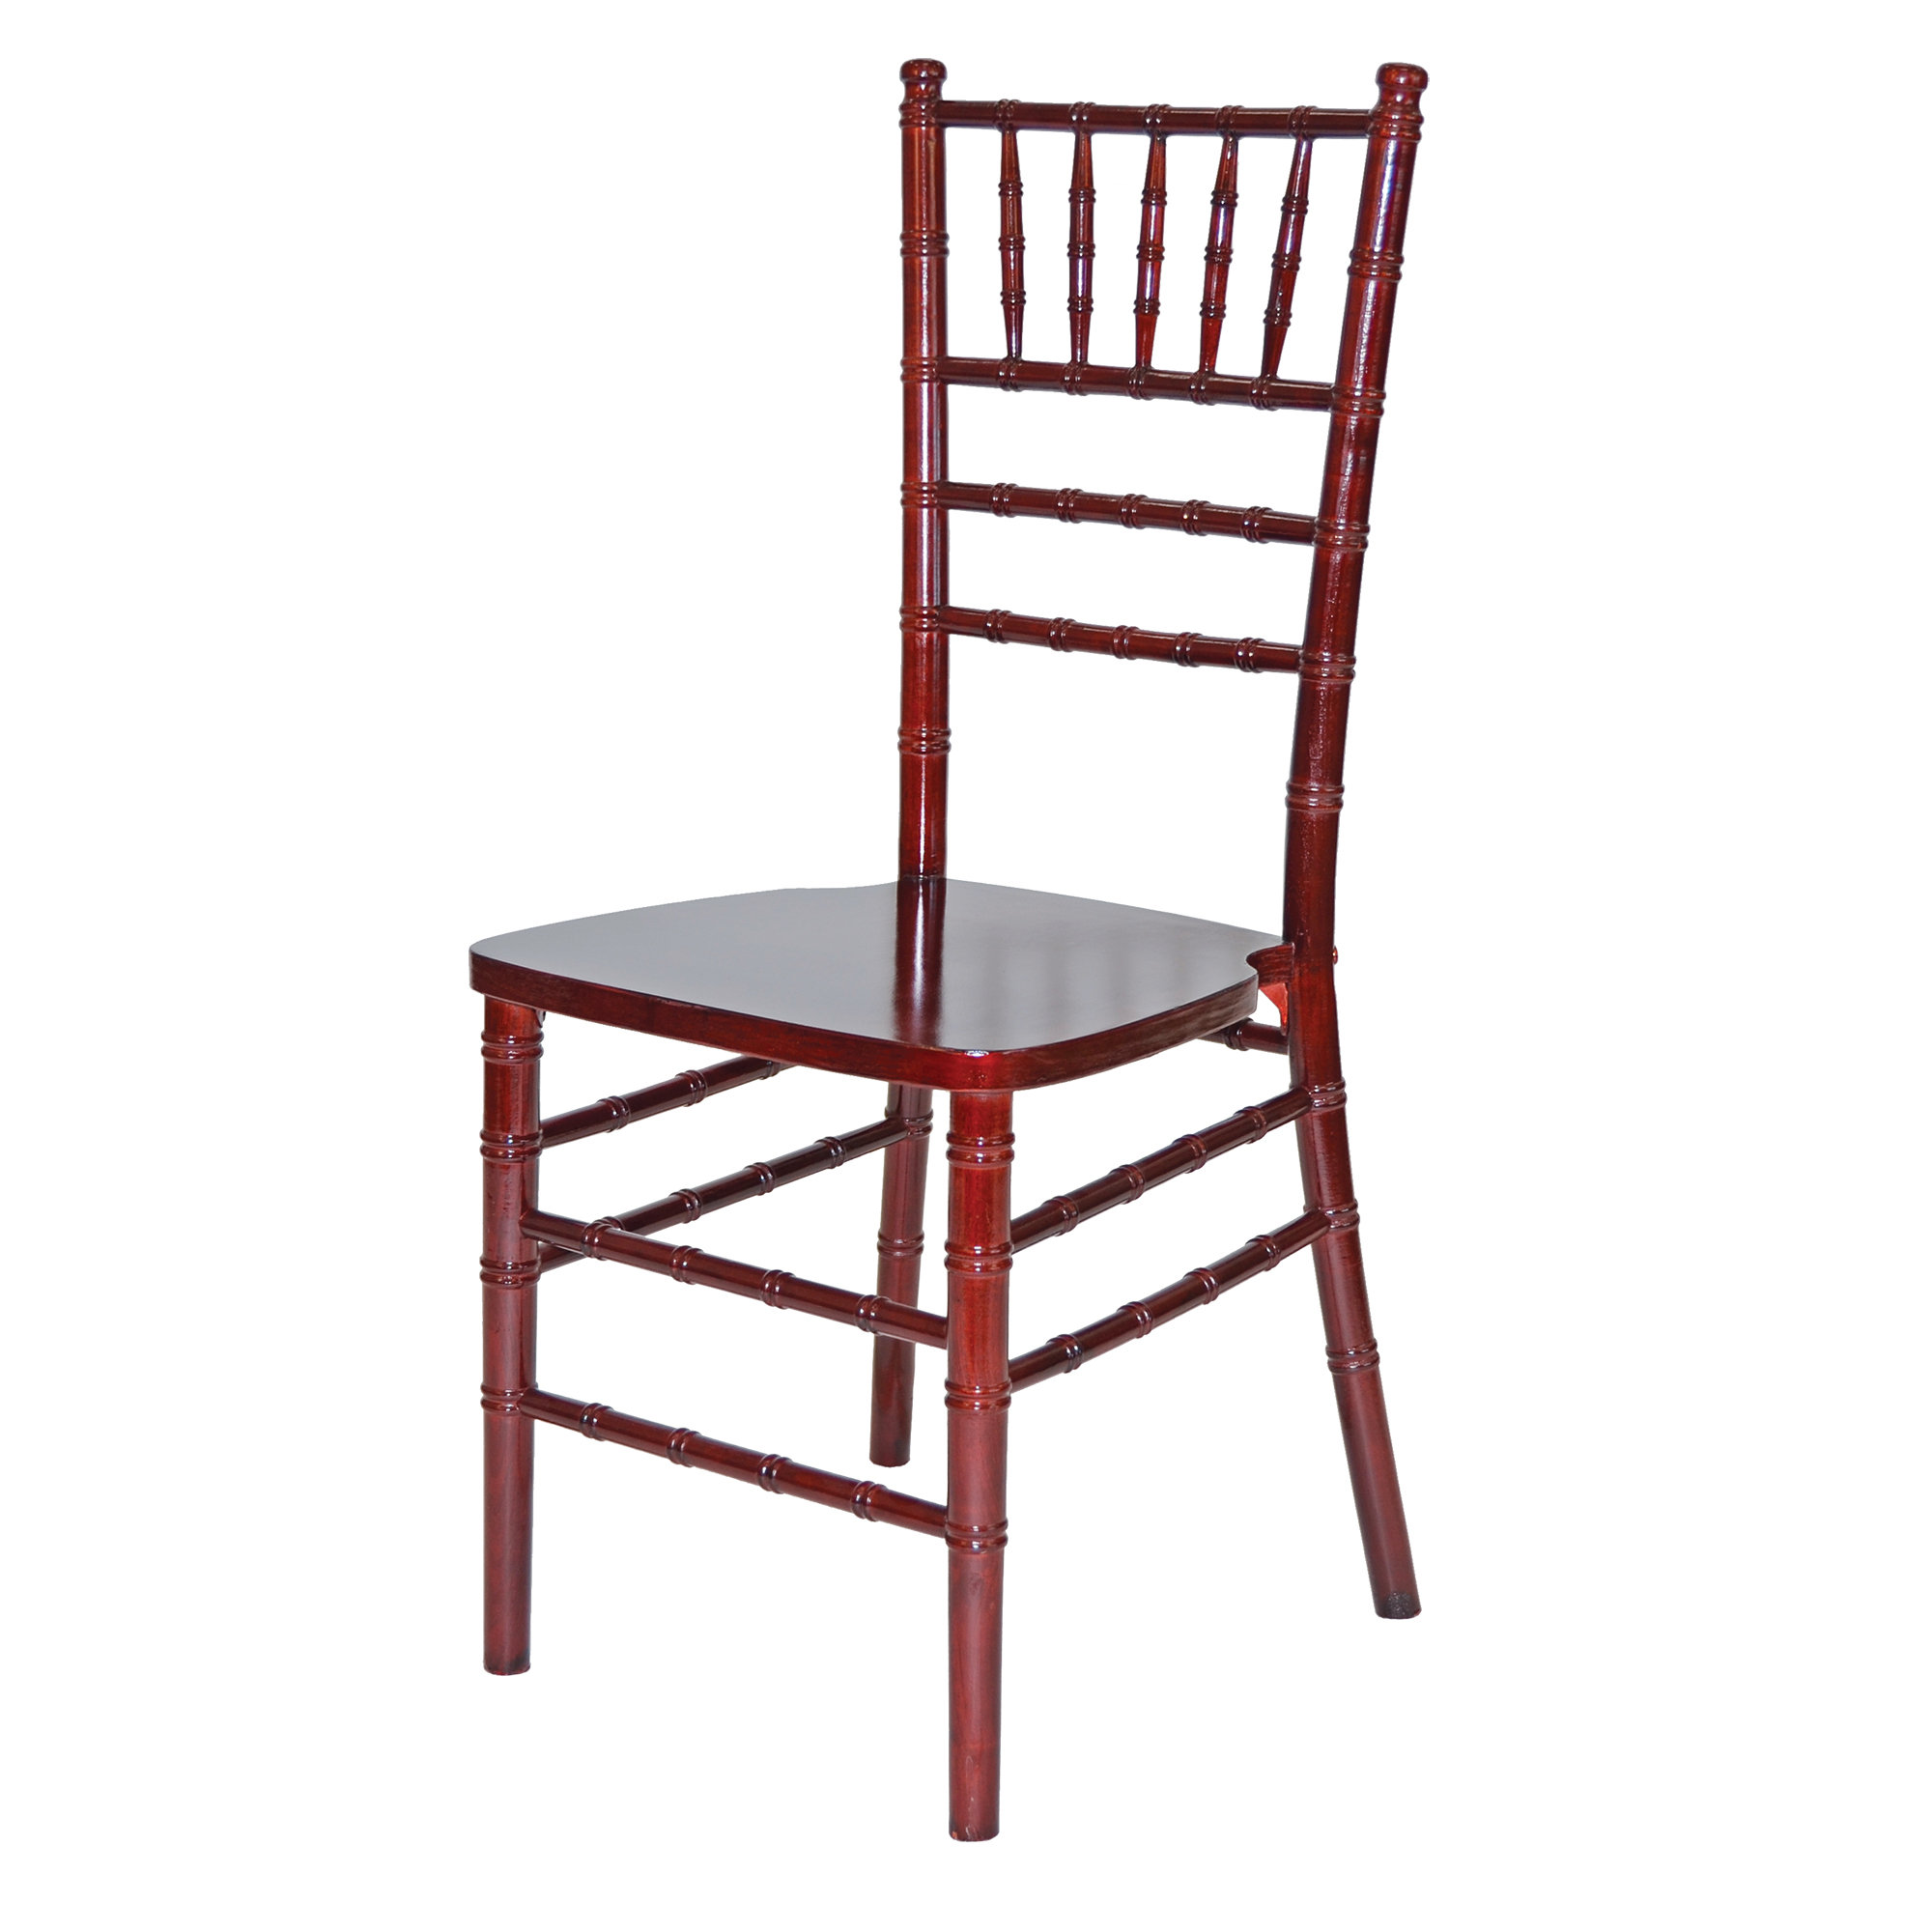 Flash Furniture Hercules Series Gold Wood Chiavari Chair Free2dayship Taxfree for sale online 